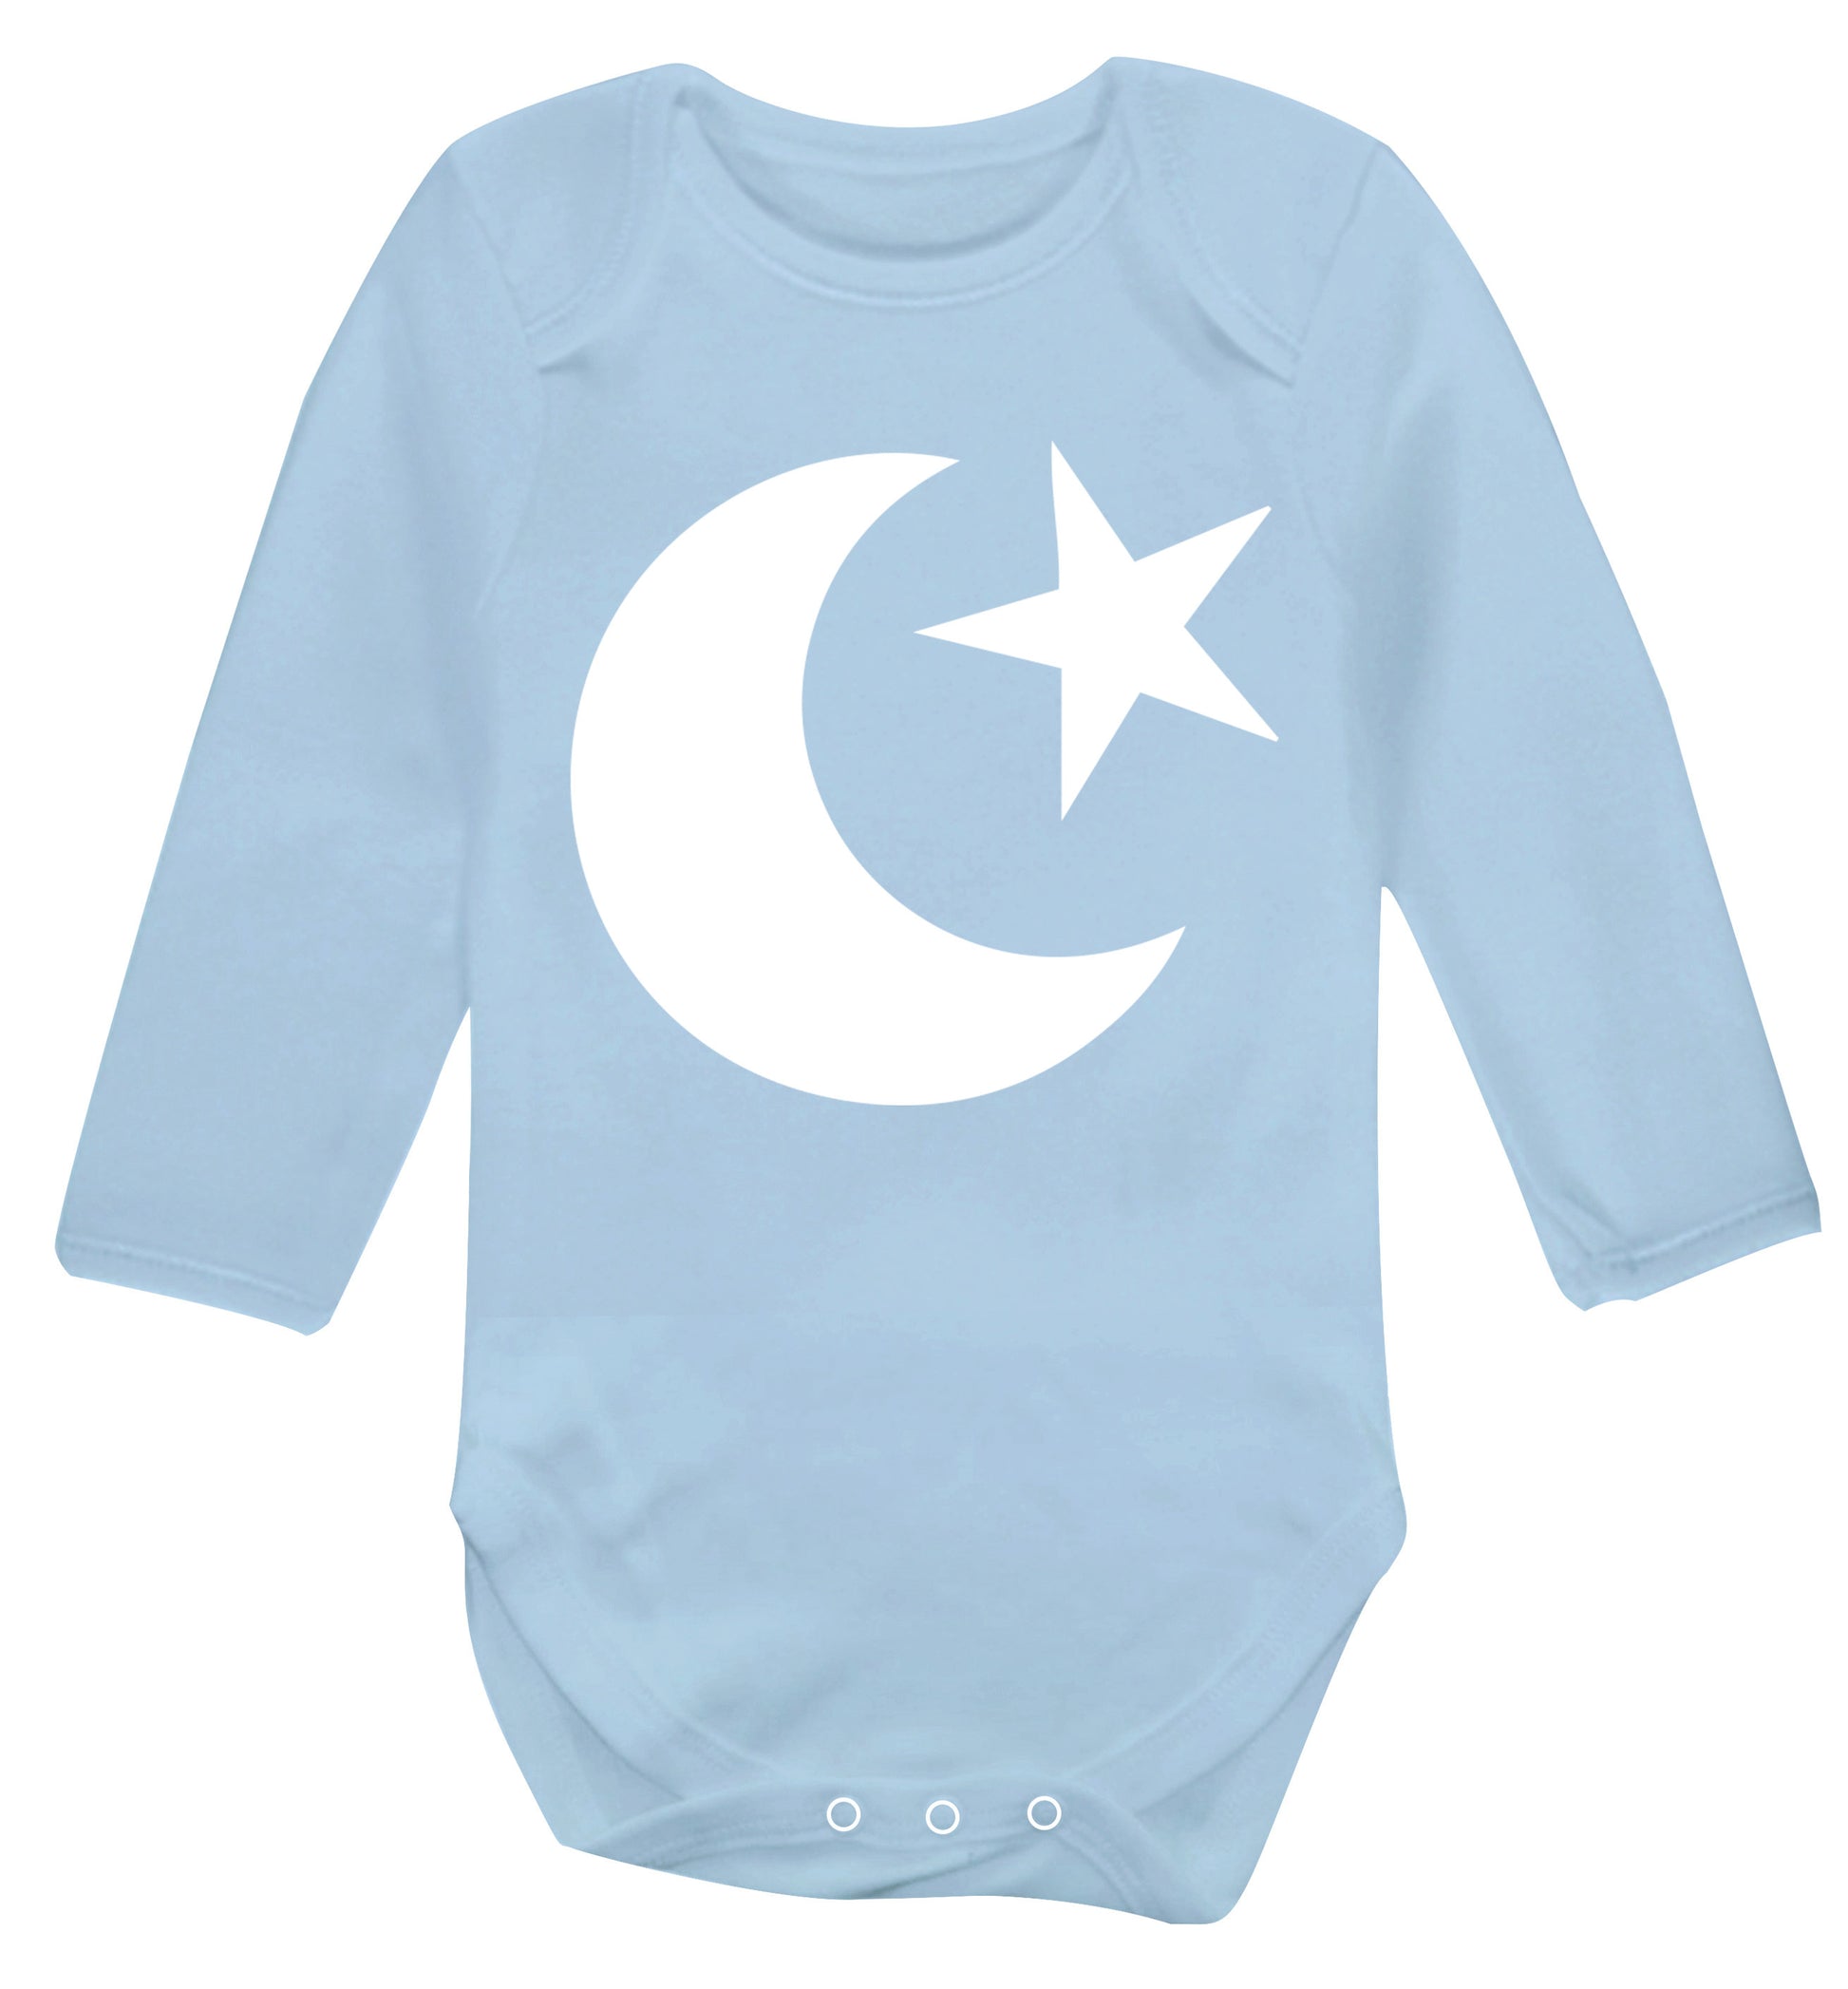 Eid Symbol Baby Vest long sleeved pale blue 6-12 months